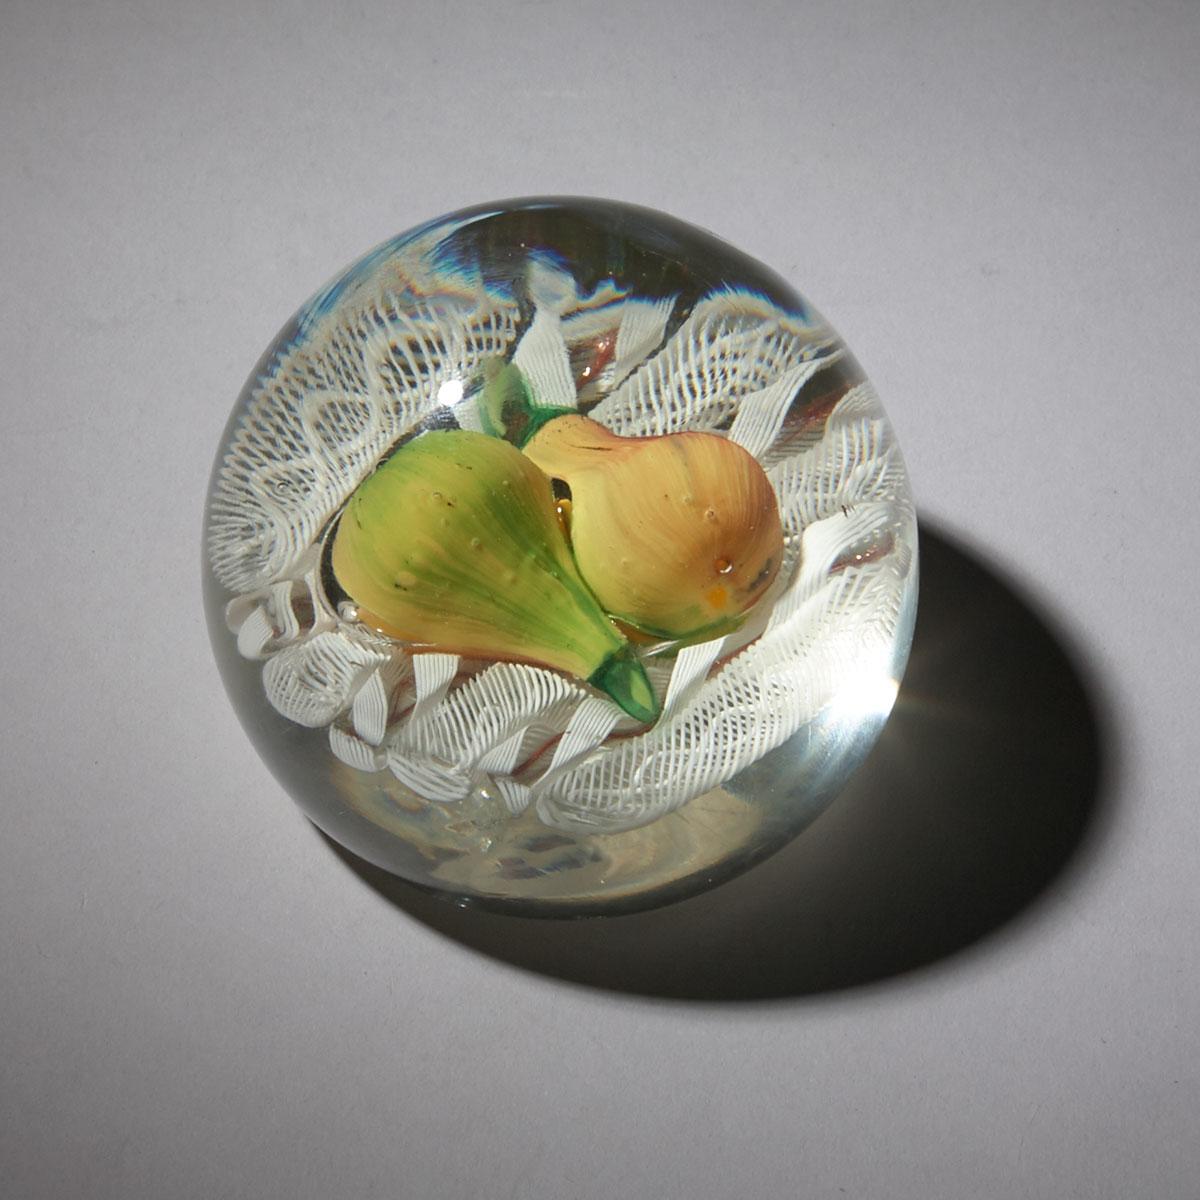 Latticino Ground Pears Glass Paperweight, 19th/20th century